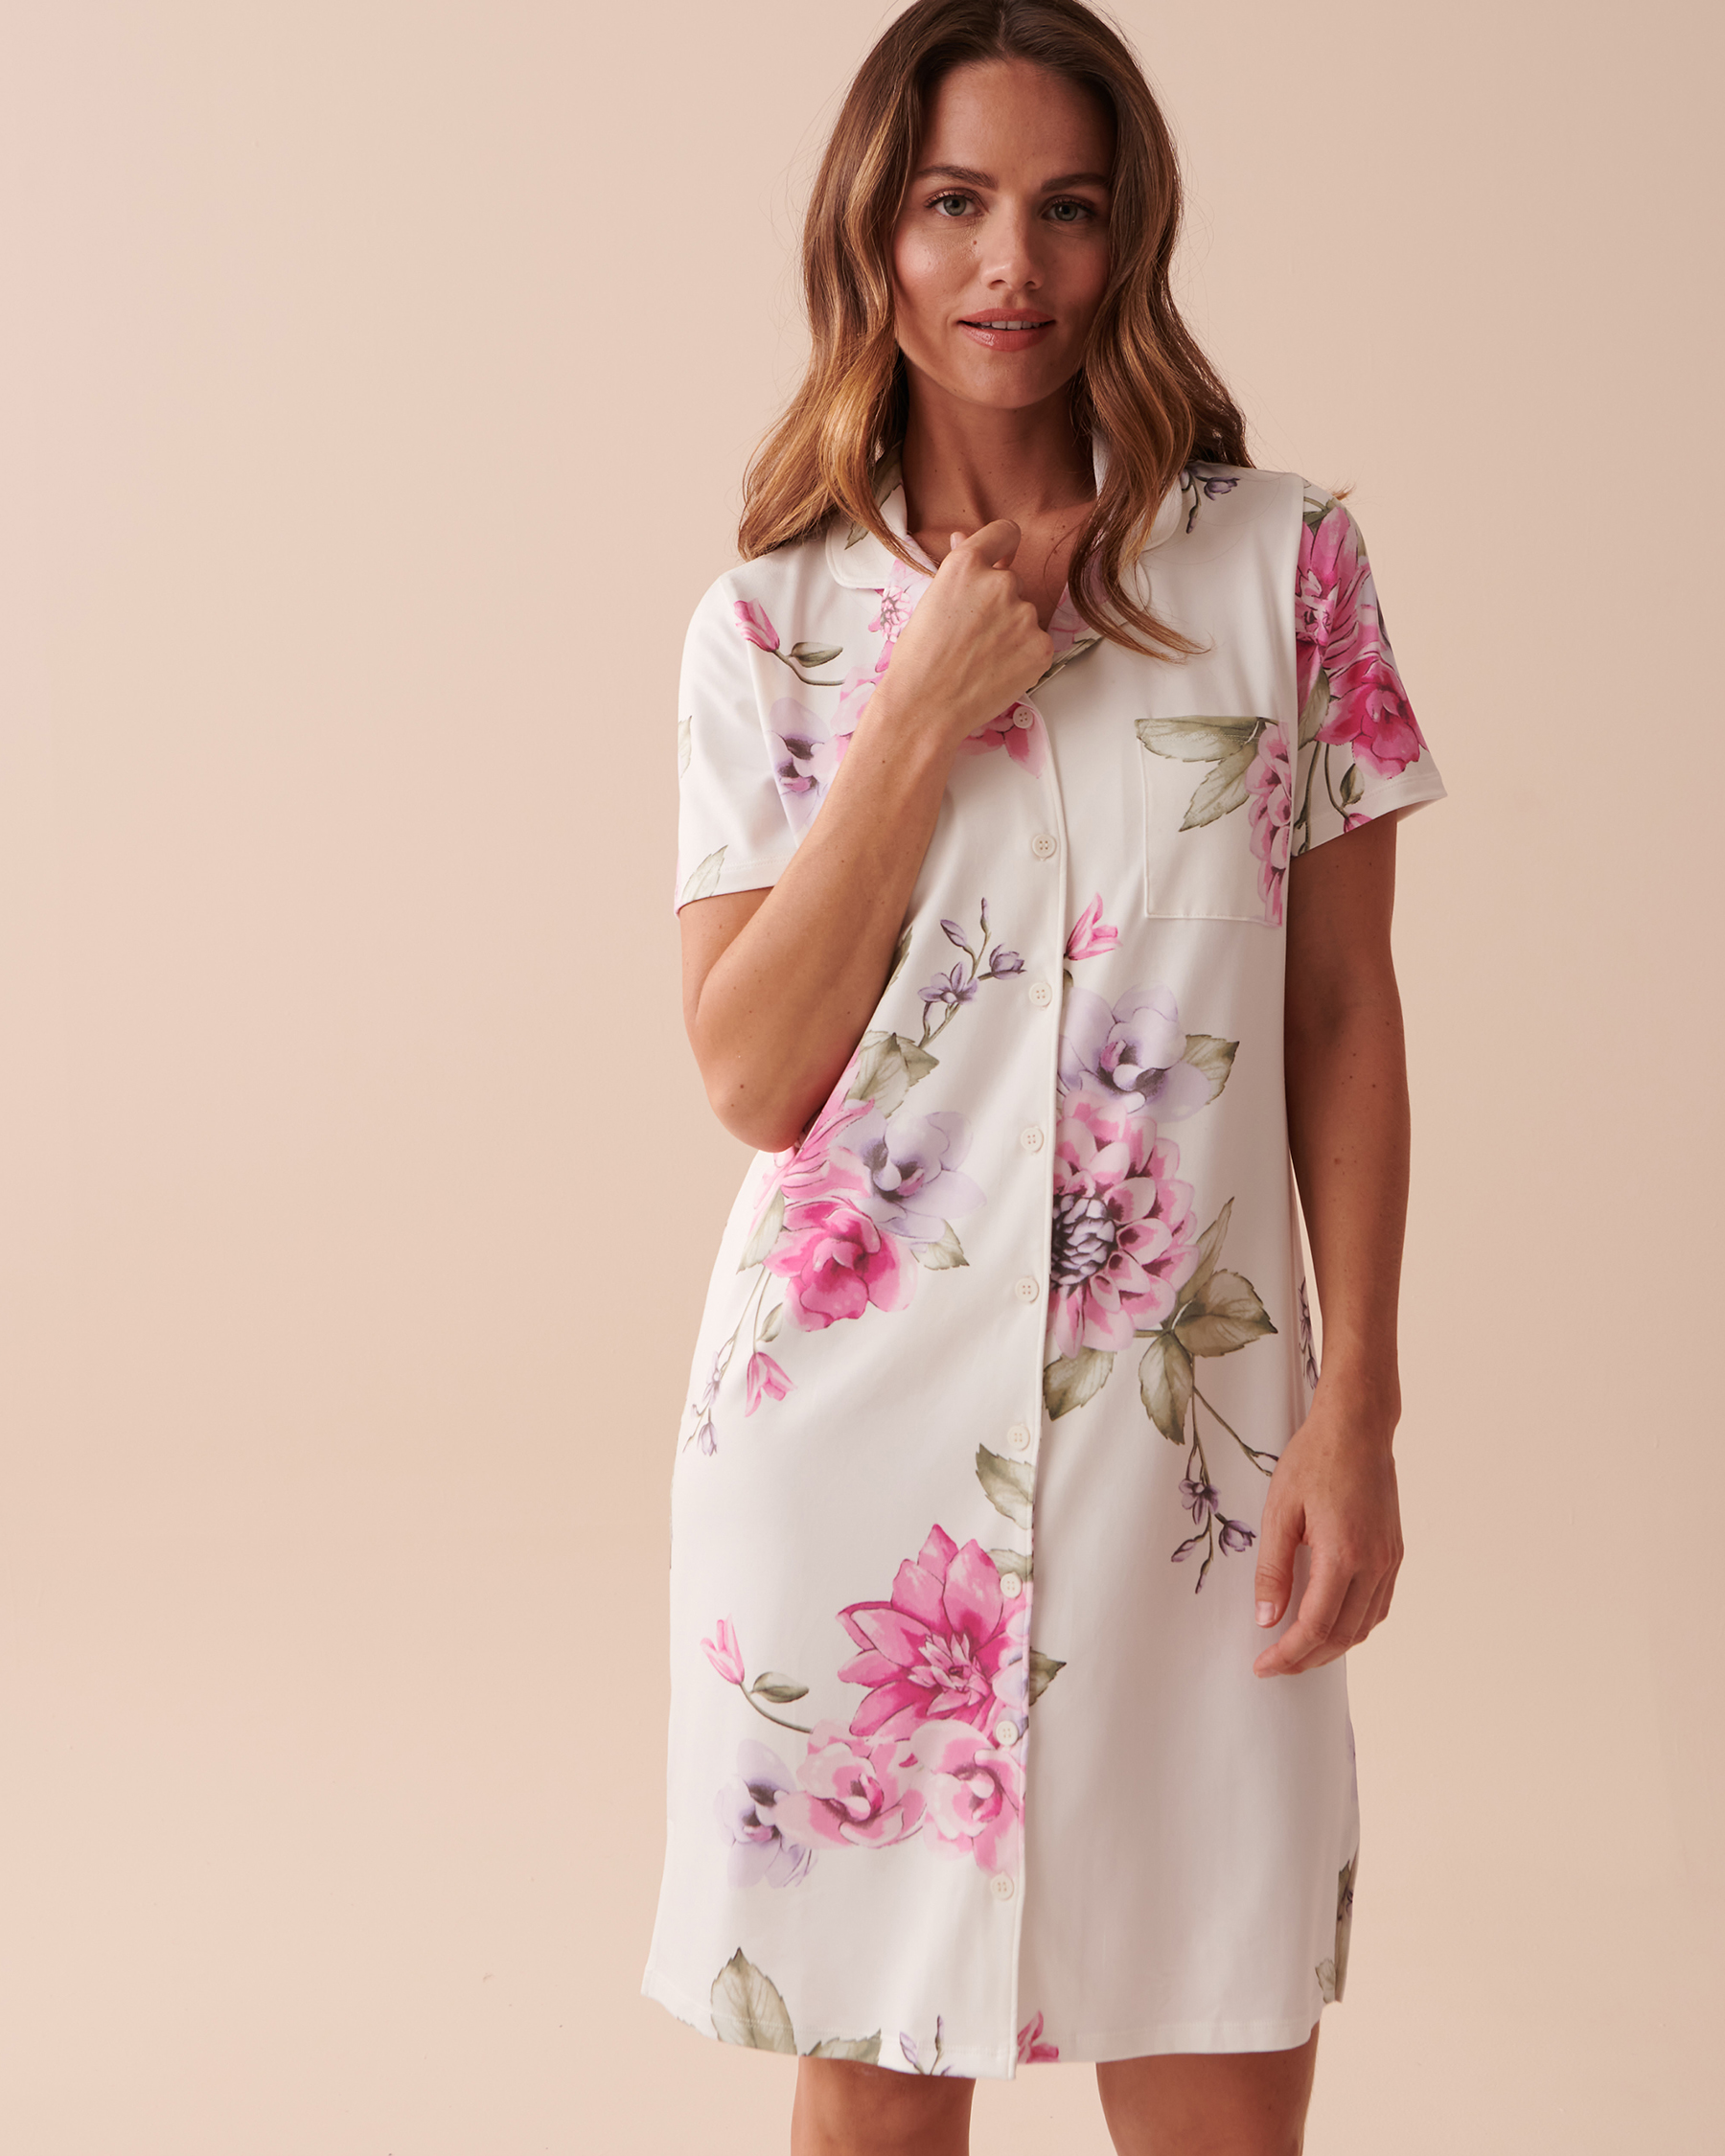 la Vie en Rose Women’s Peonies Garden Floral Super Soft Short Sleeve Sleepshirt